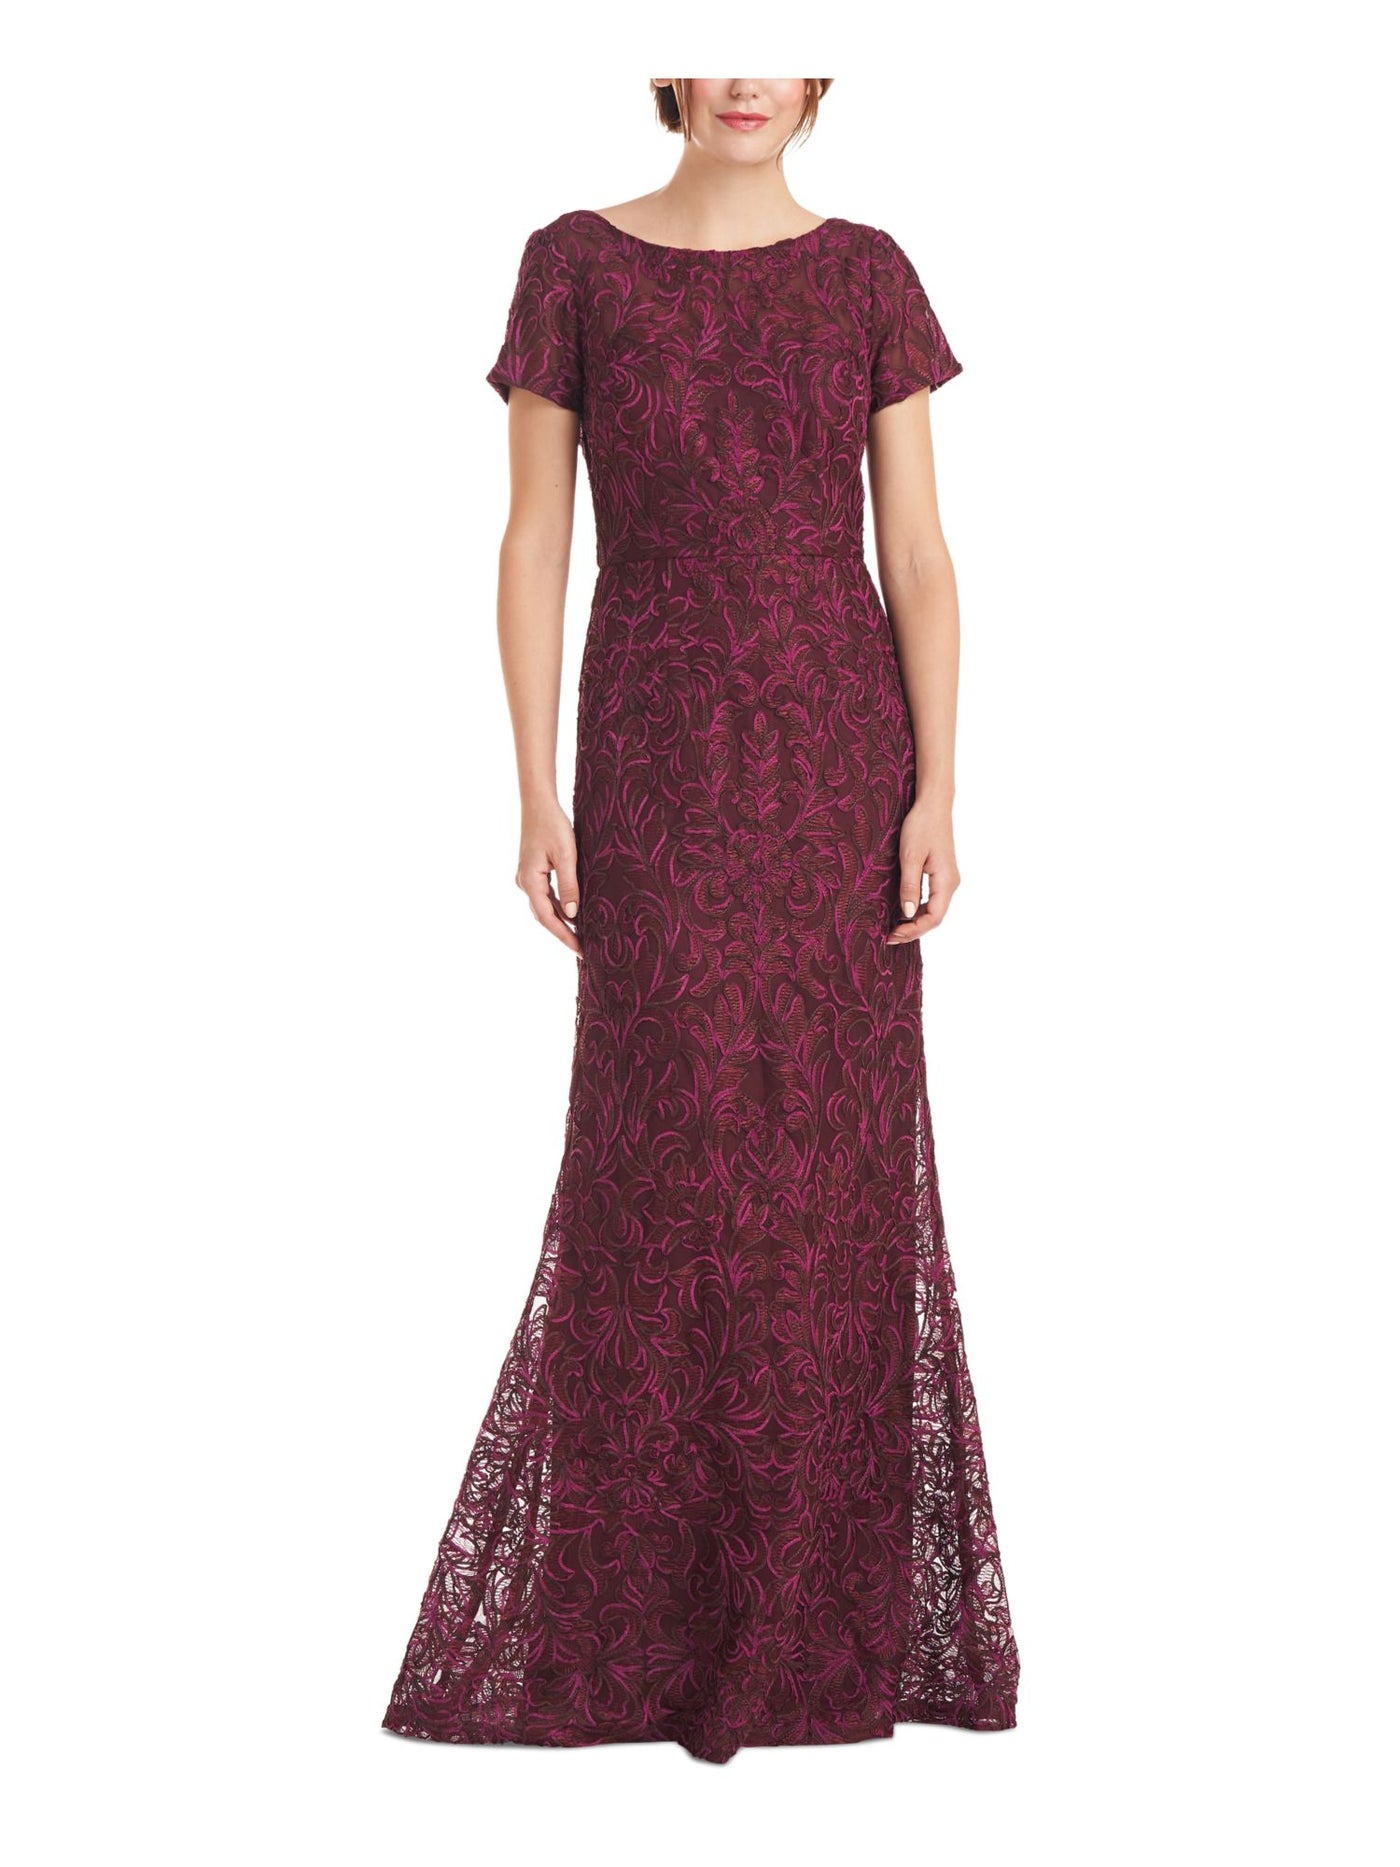 JS COLLECTION Womens Burgundy Embellished Zippered Short Sleeve Boat Neck Full-Length Formal Gown Dress 2